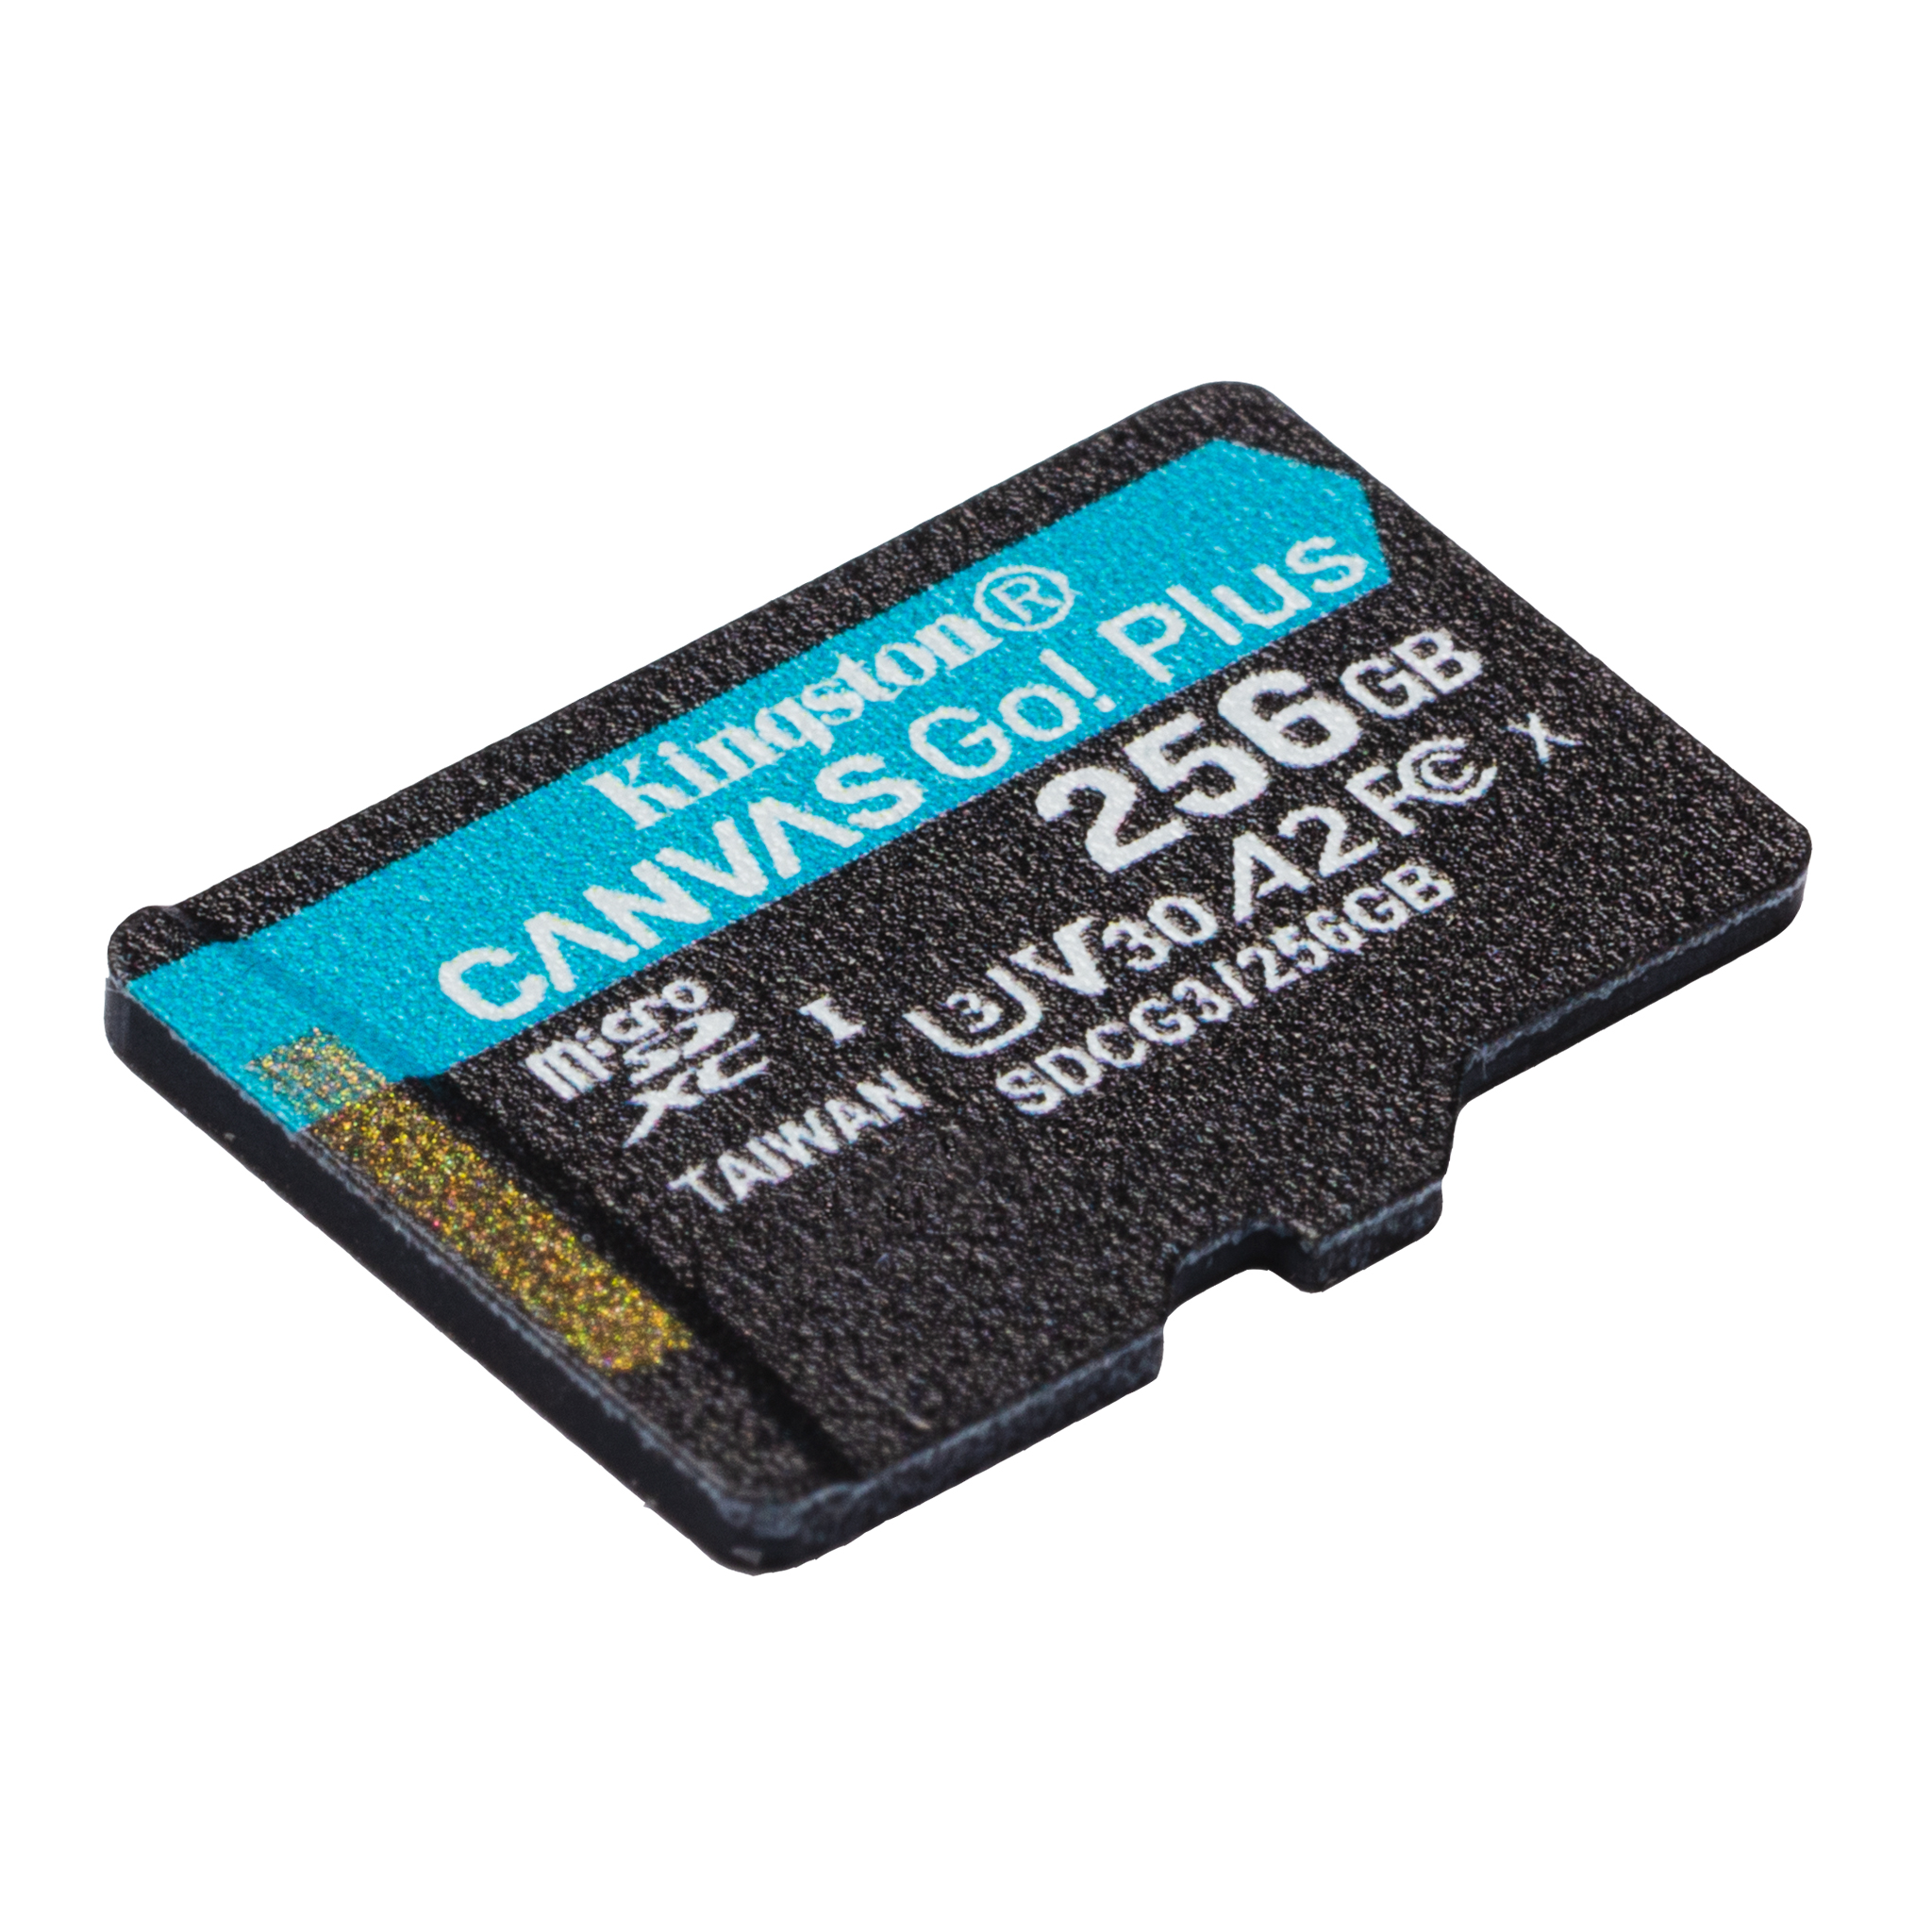 Canvas Go! Plus Class 10 microSD Cards - V30, A2 - 64GB-512GB 